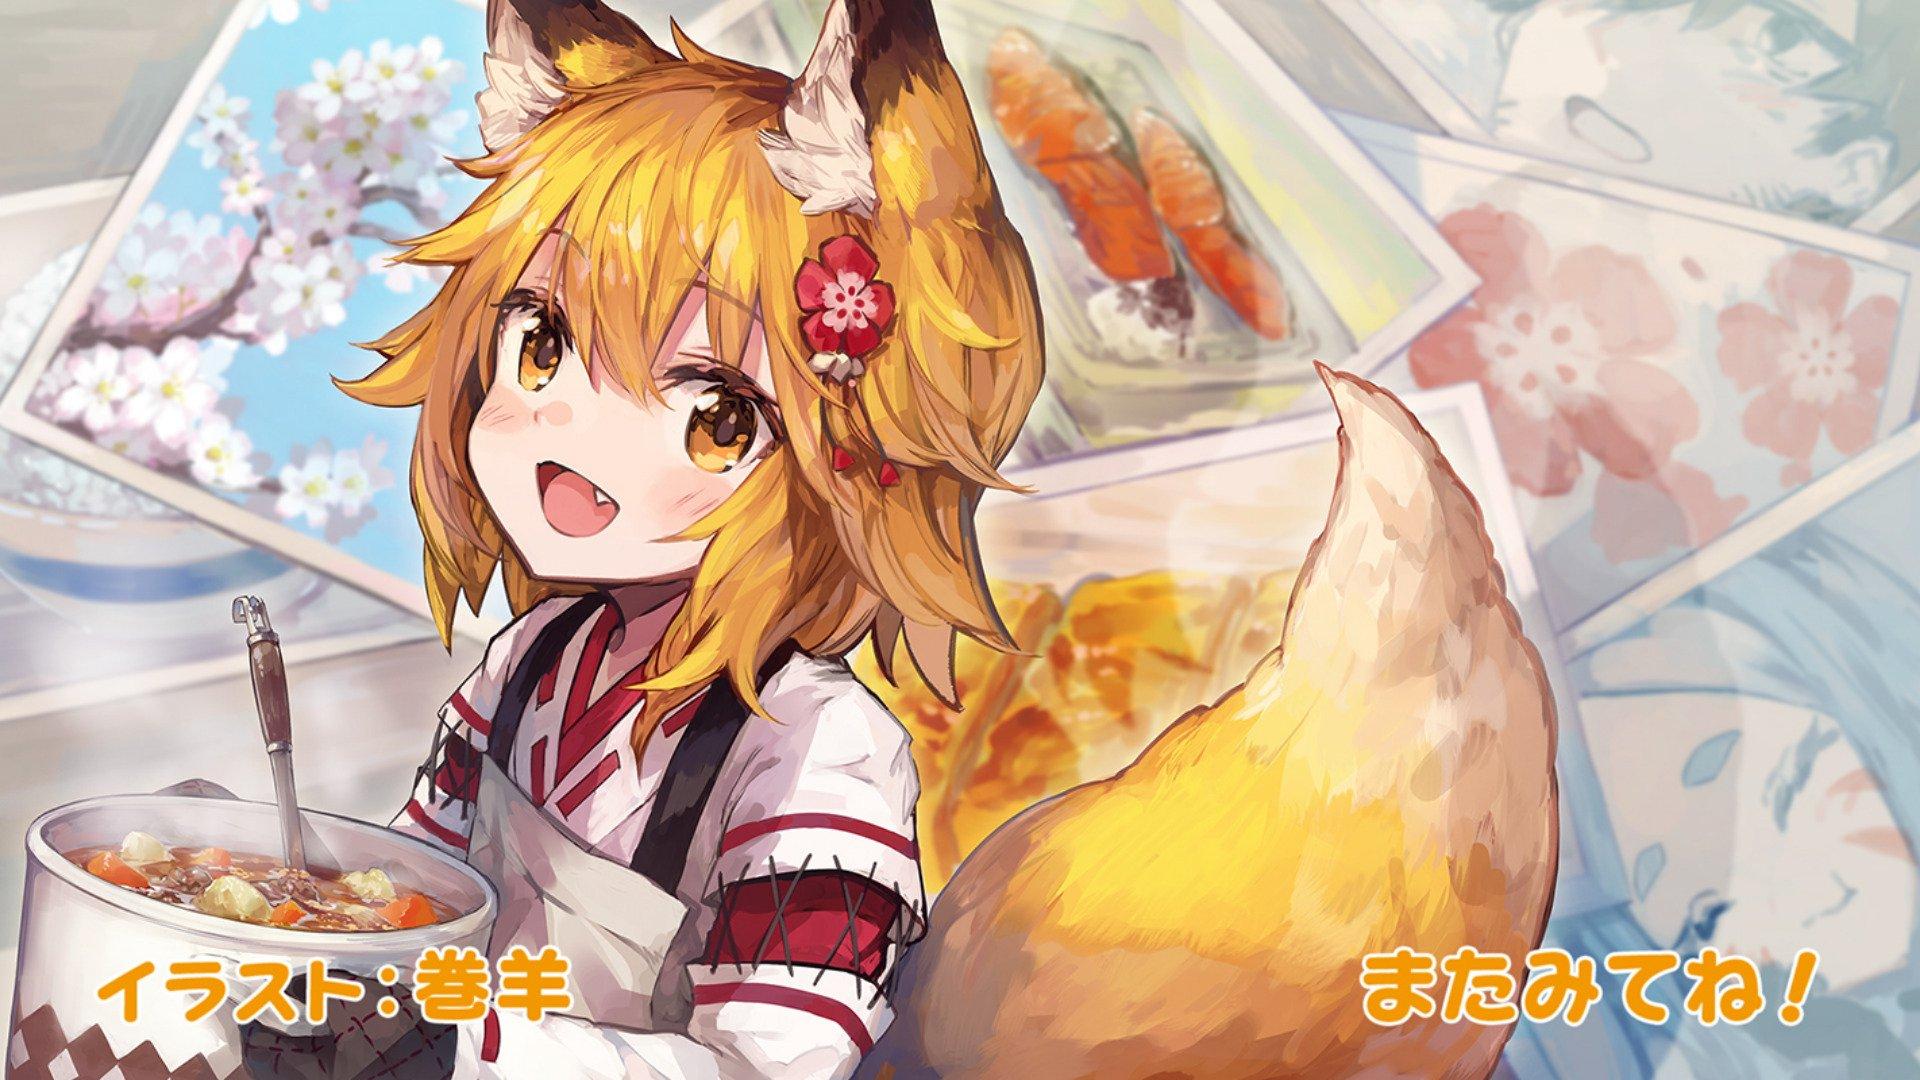 The Helpful Fox Senko-san Wallpapers - Wallpaper Cave